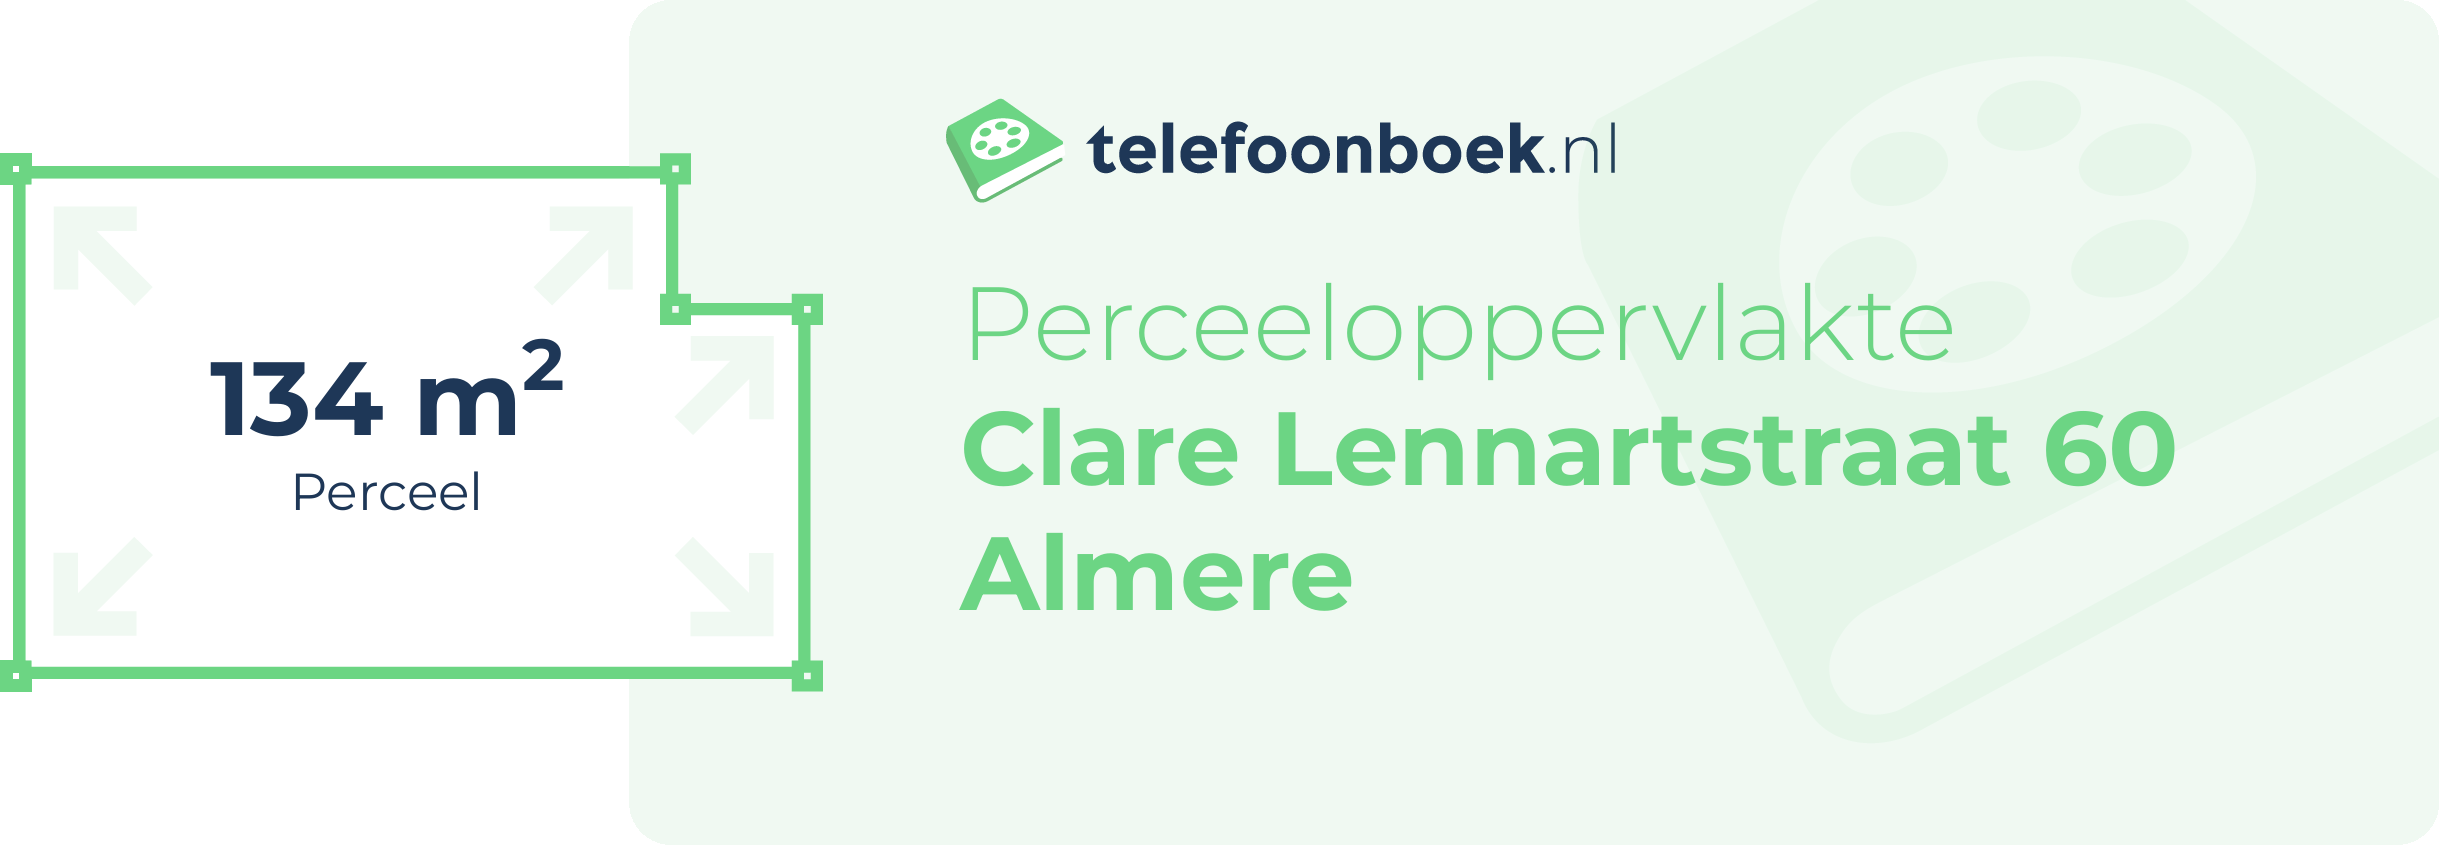 Perceeloppervlakte Clare Lennartstraat 60 Almere